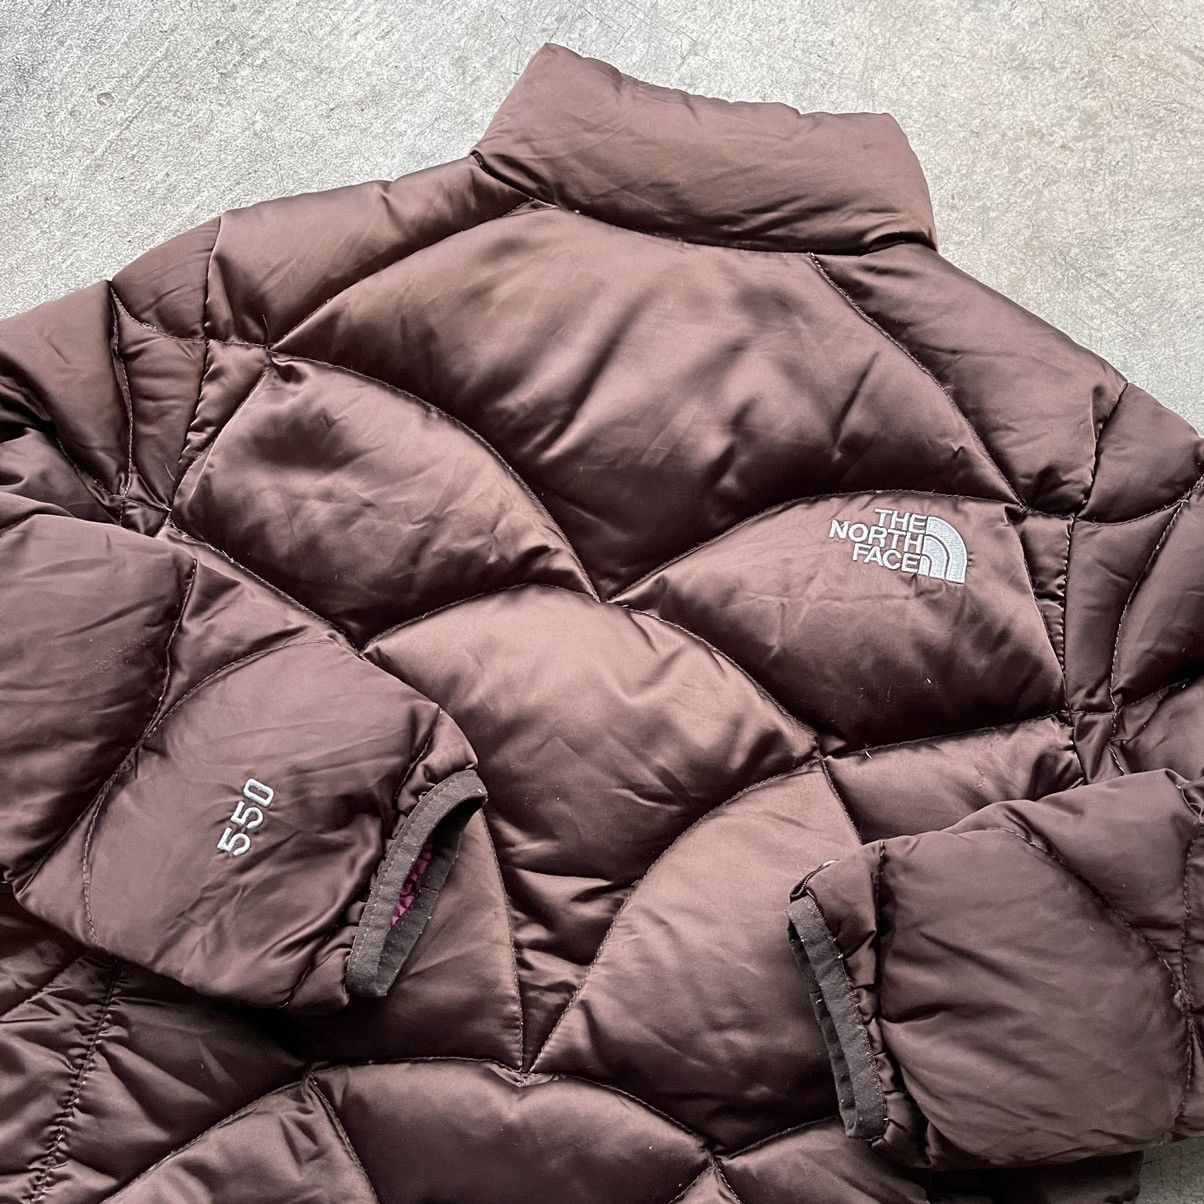 Vintage Brown North Face Puffer Jacket Nuptse 550 S Size US S / EU 44-46 / 1 - 5 Thumbnail